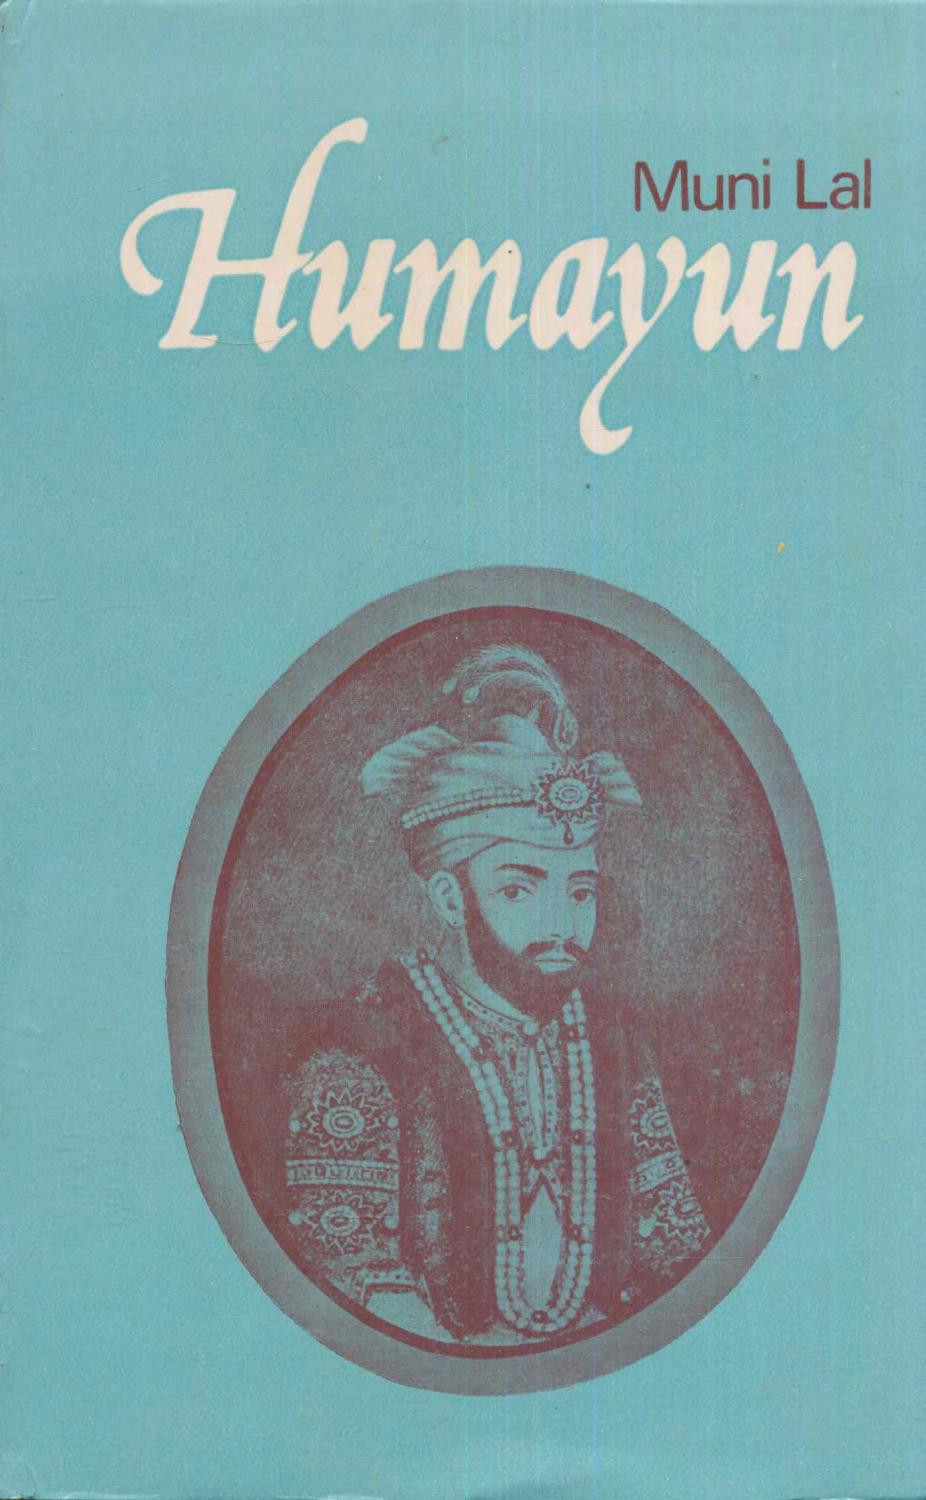 Humayun - Muni Lal (Great Mughals/Vikas) (image)